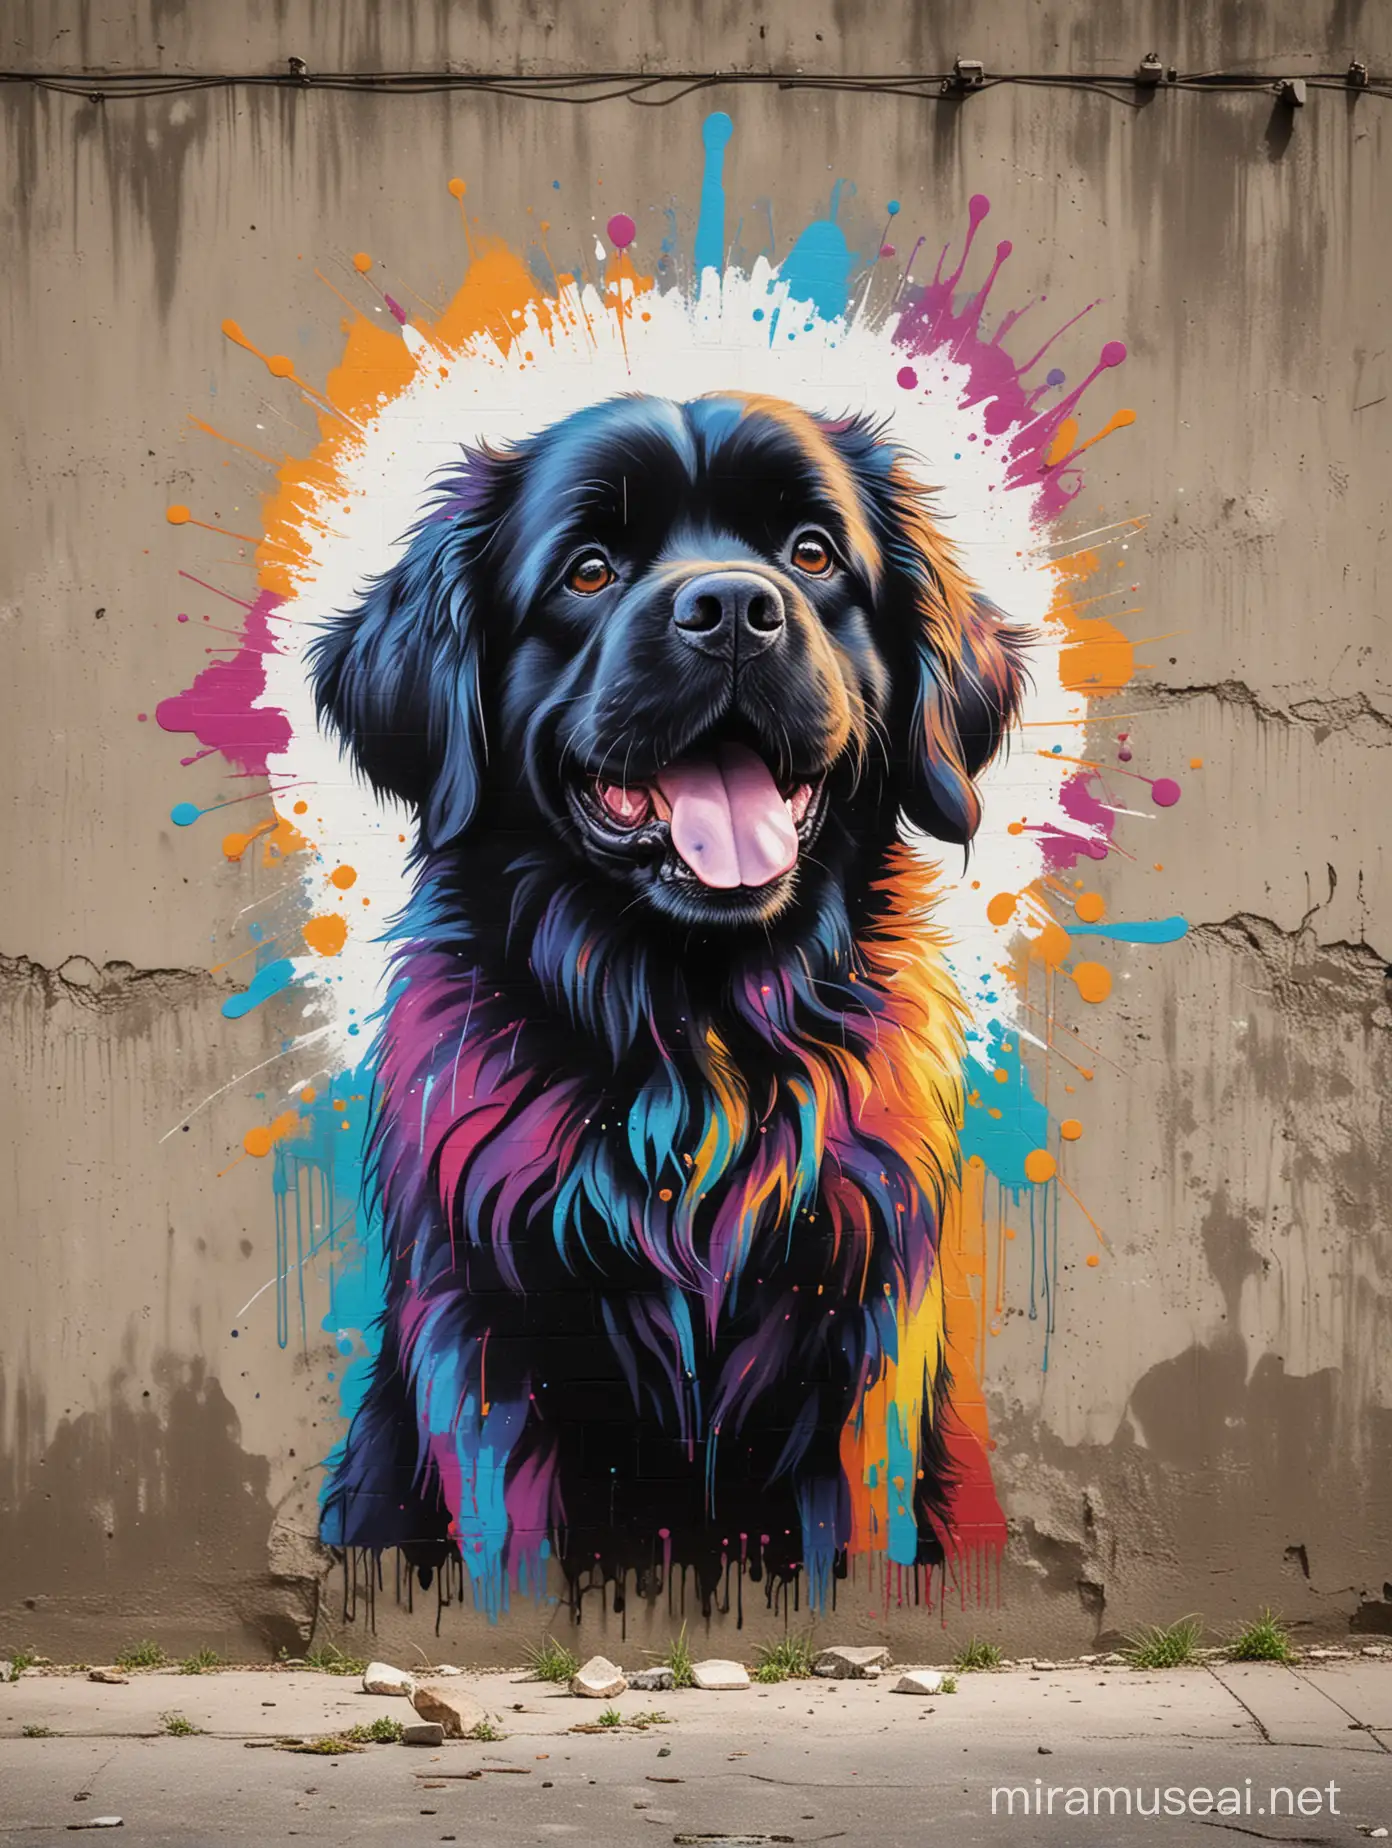 Colorful Graffiti Art Cheerful Newfoundland Dog in Rustic Setting